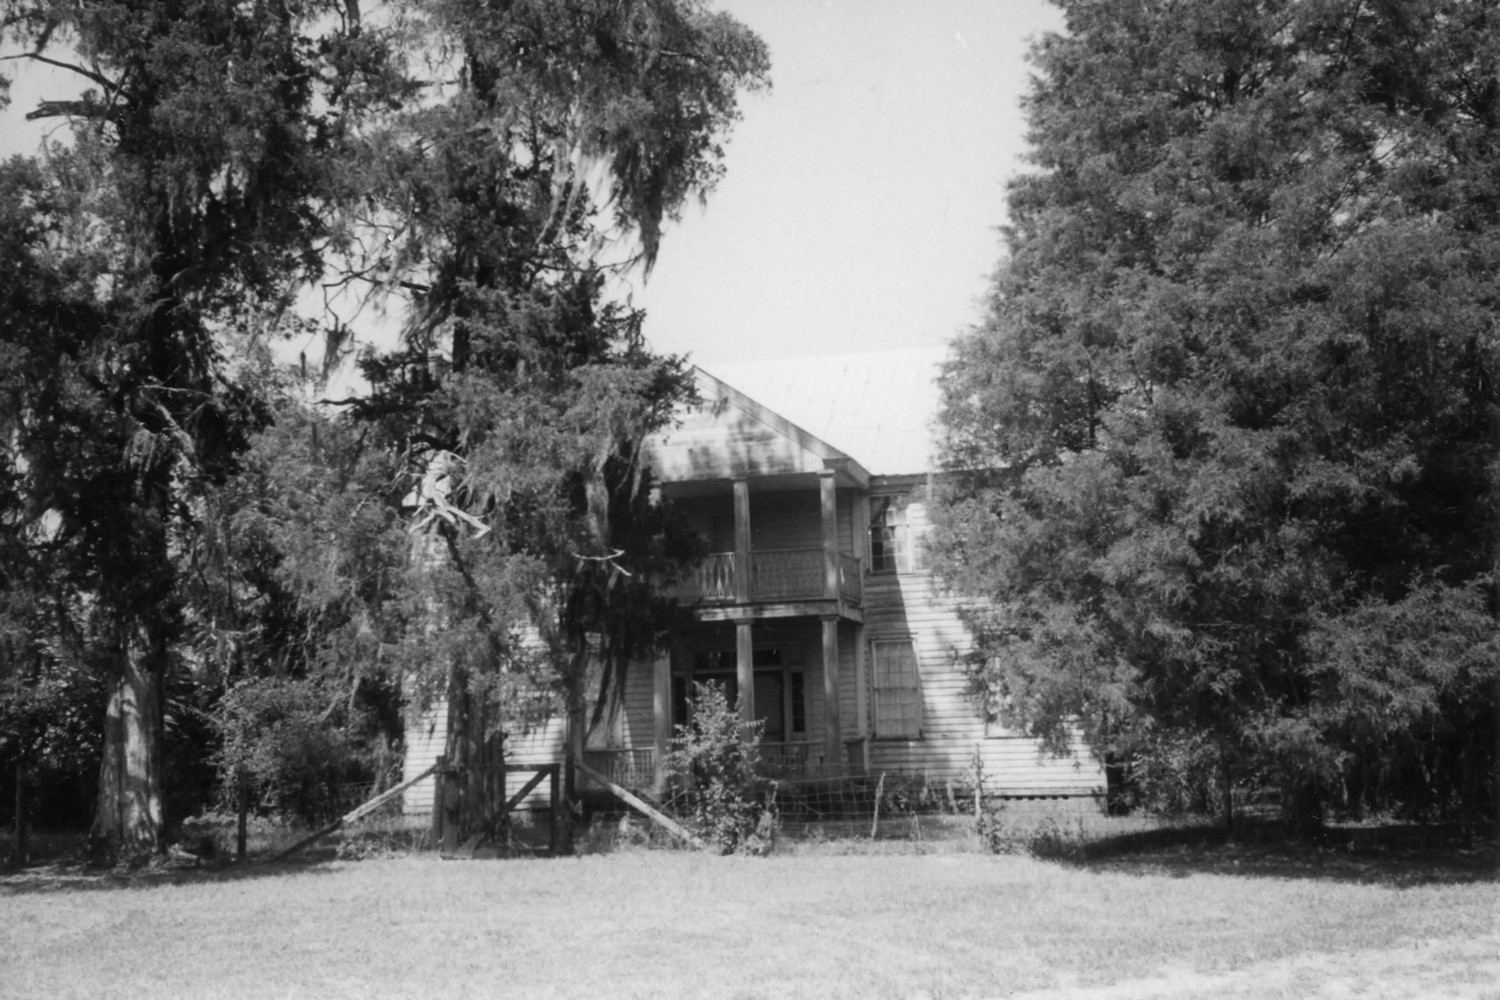 Dry Forks Plantation - James Asbury Tait House, Coy Alabama Front elevation and yard landscape facing north (1998)